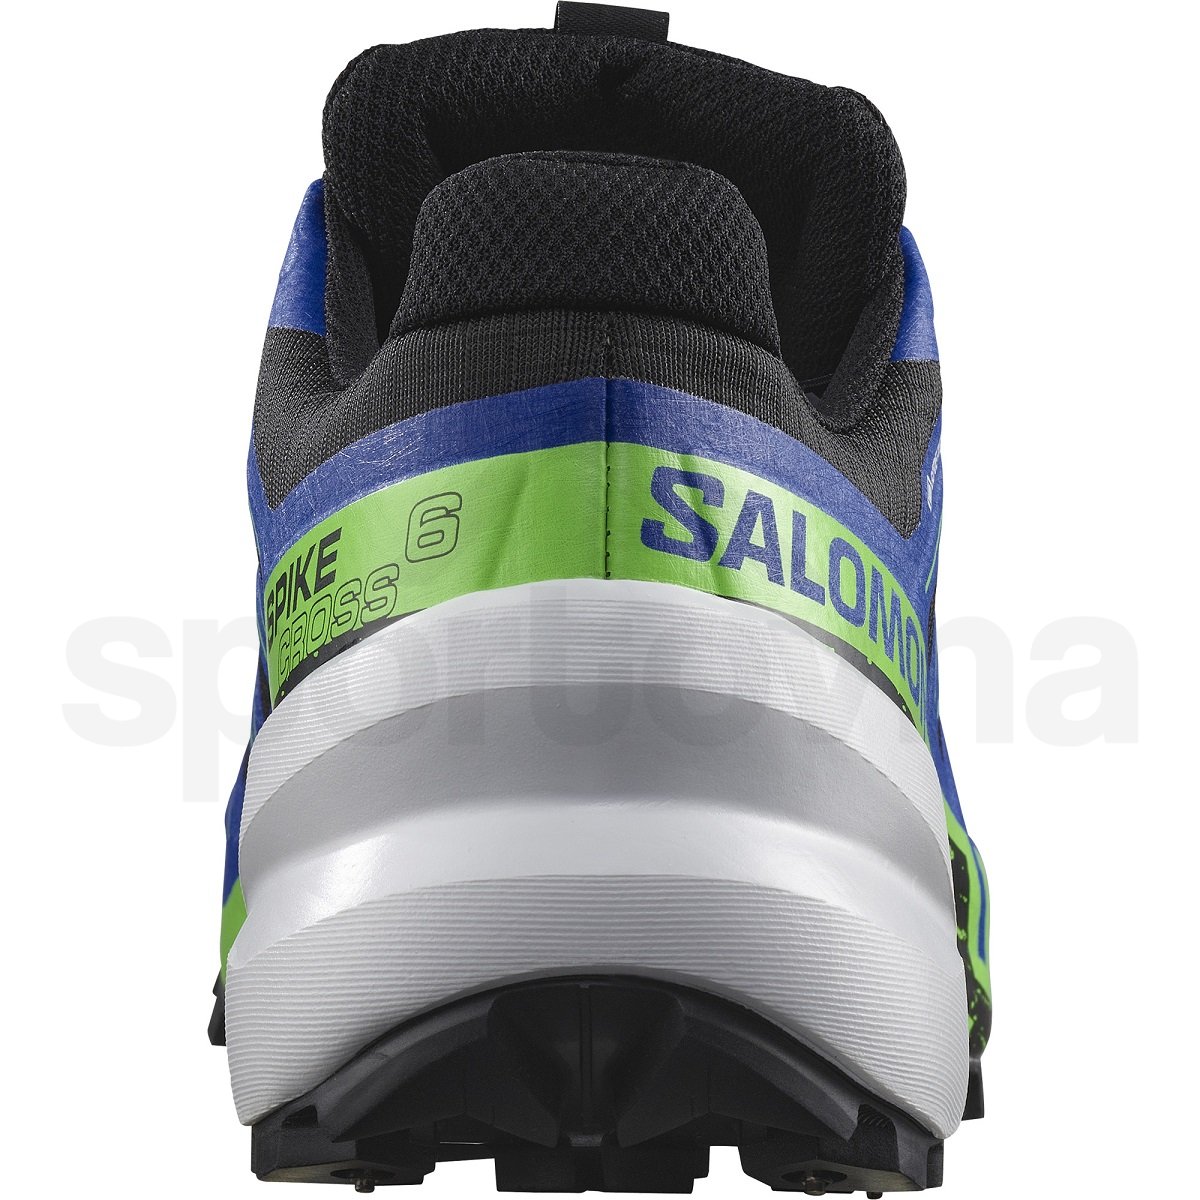 Obuv Salomon Spikecross 6 GTX - černá/modrá/zelená